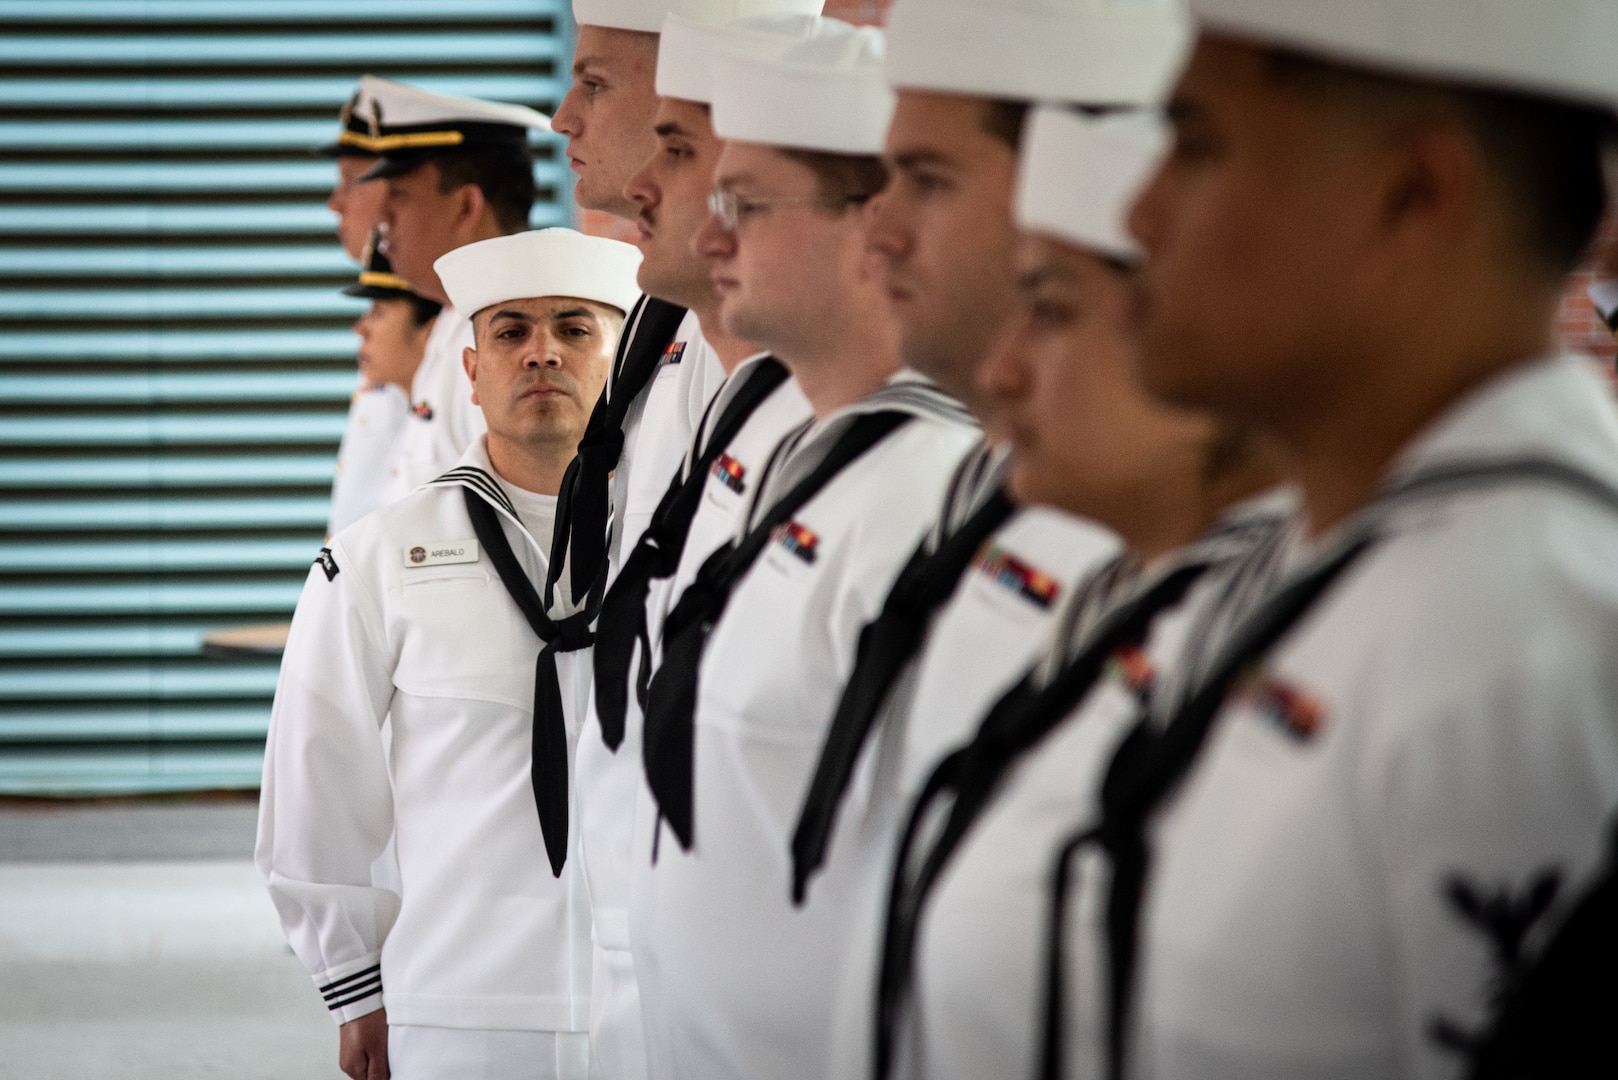 marine uniforms for women 2022